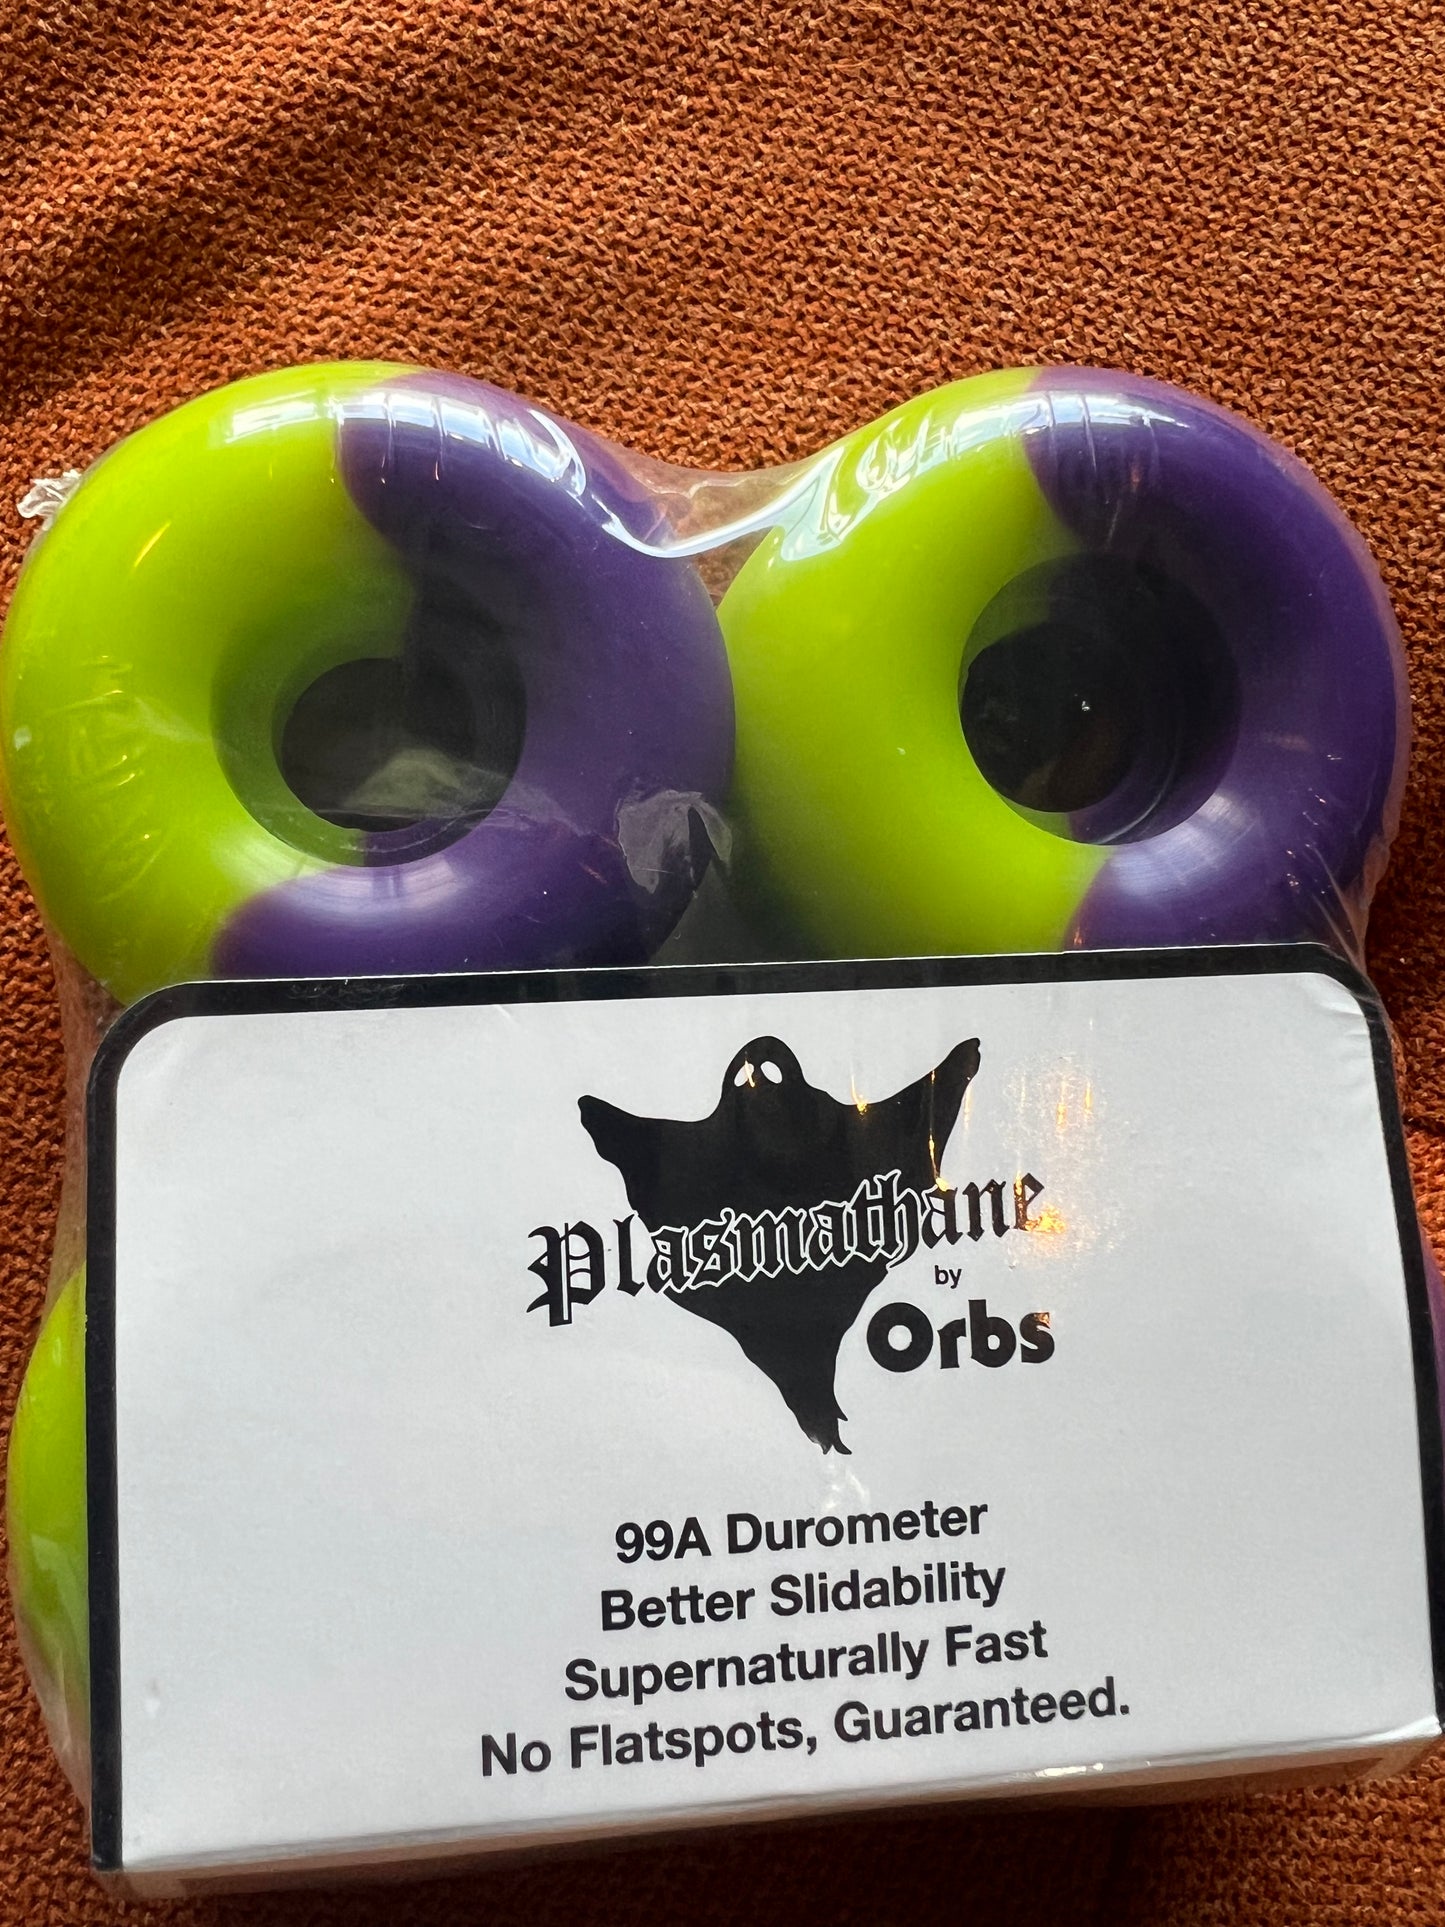 Orbs Apparitions Green/Purple split 53mm